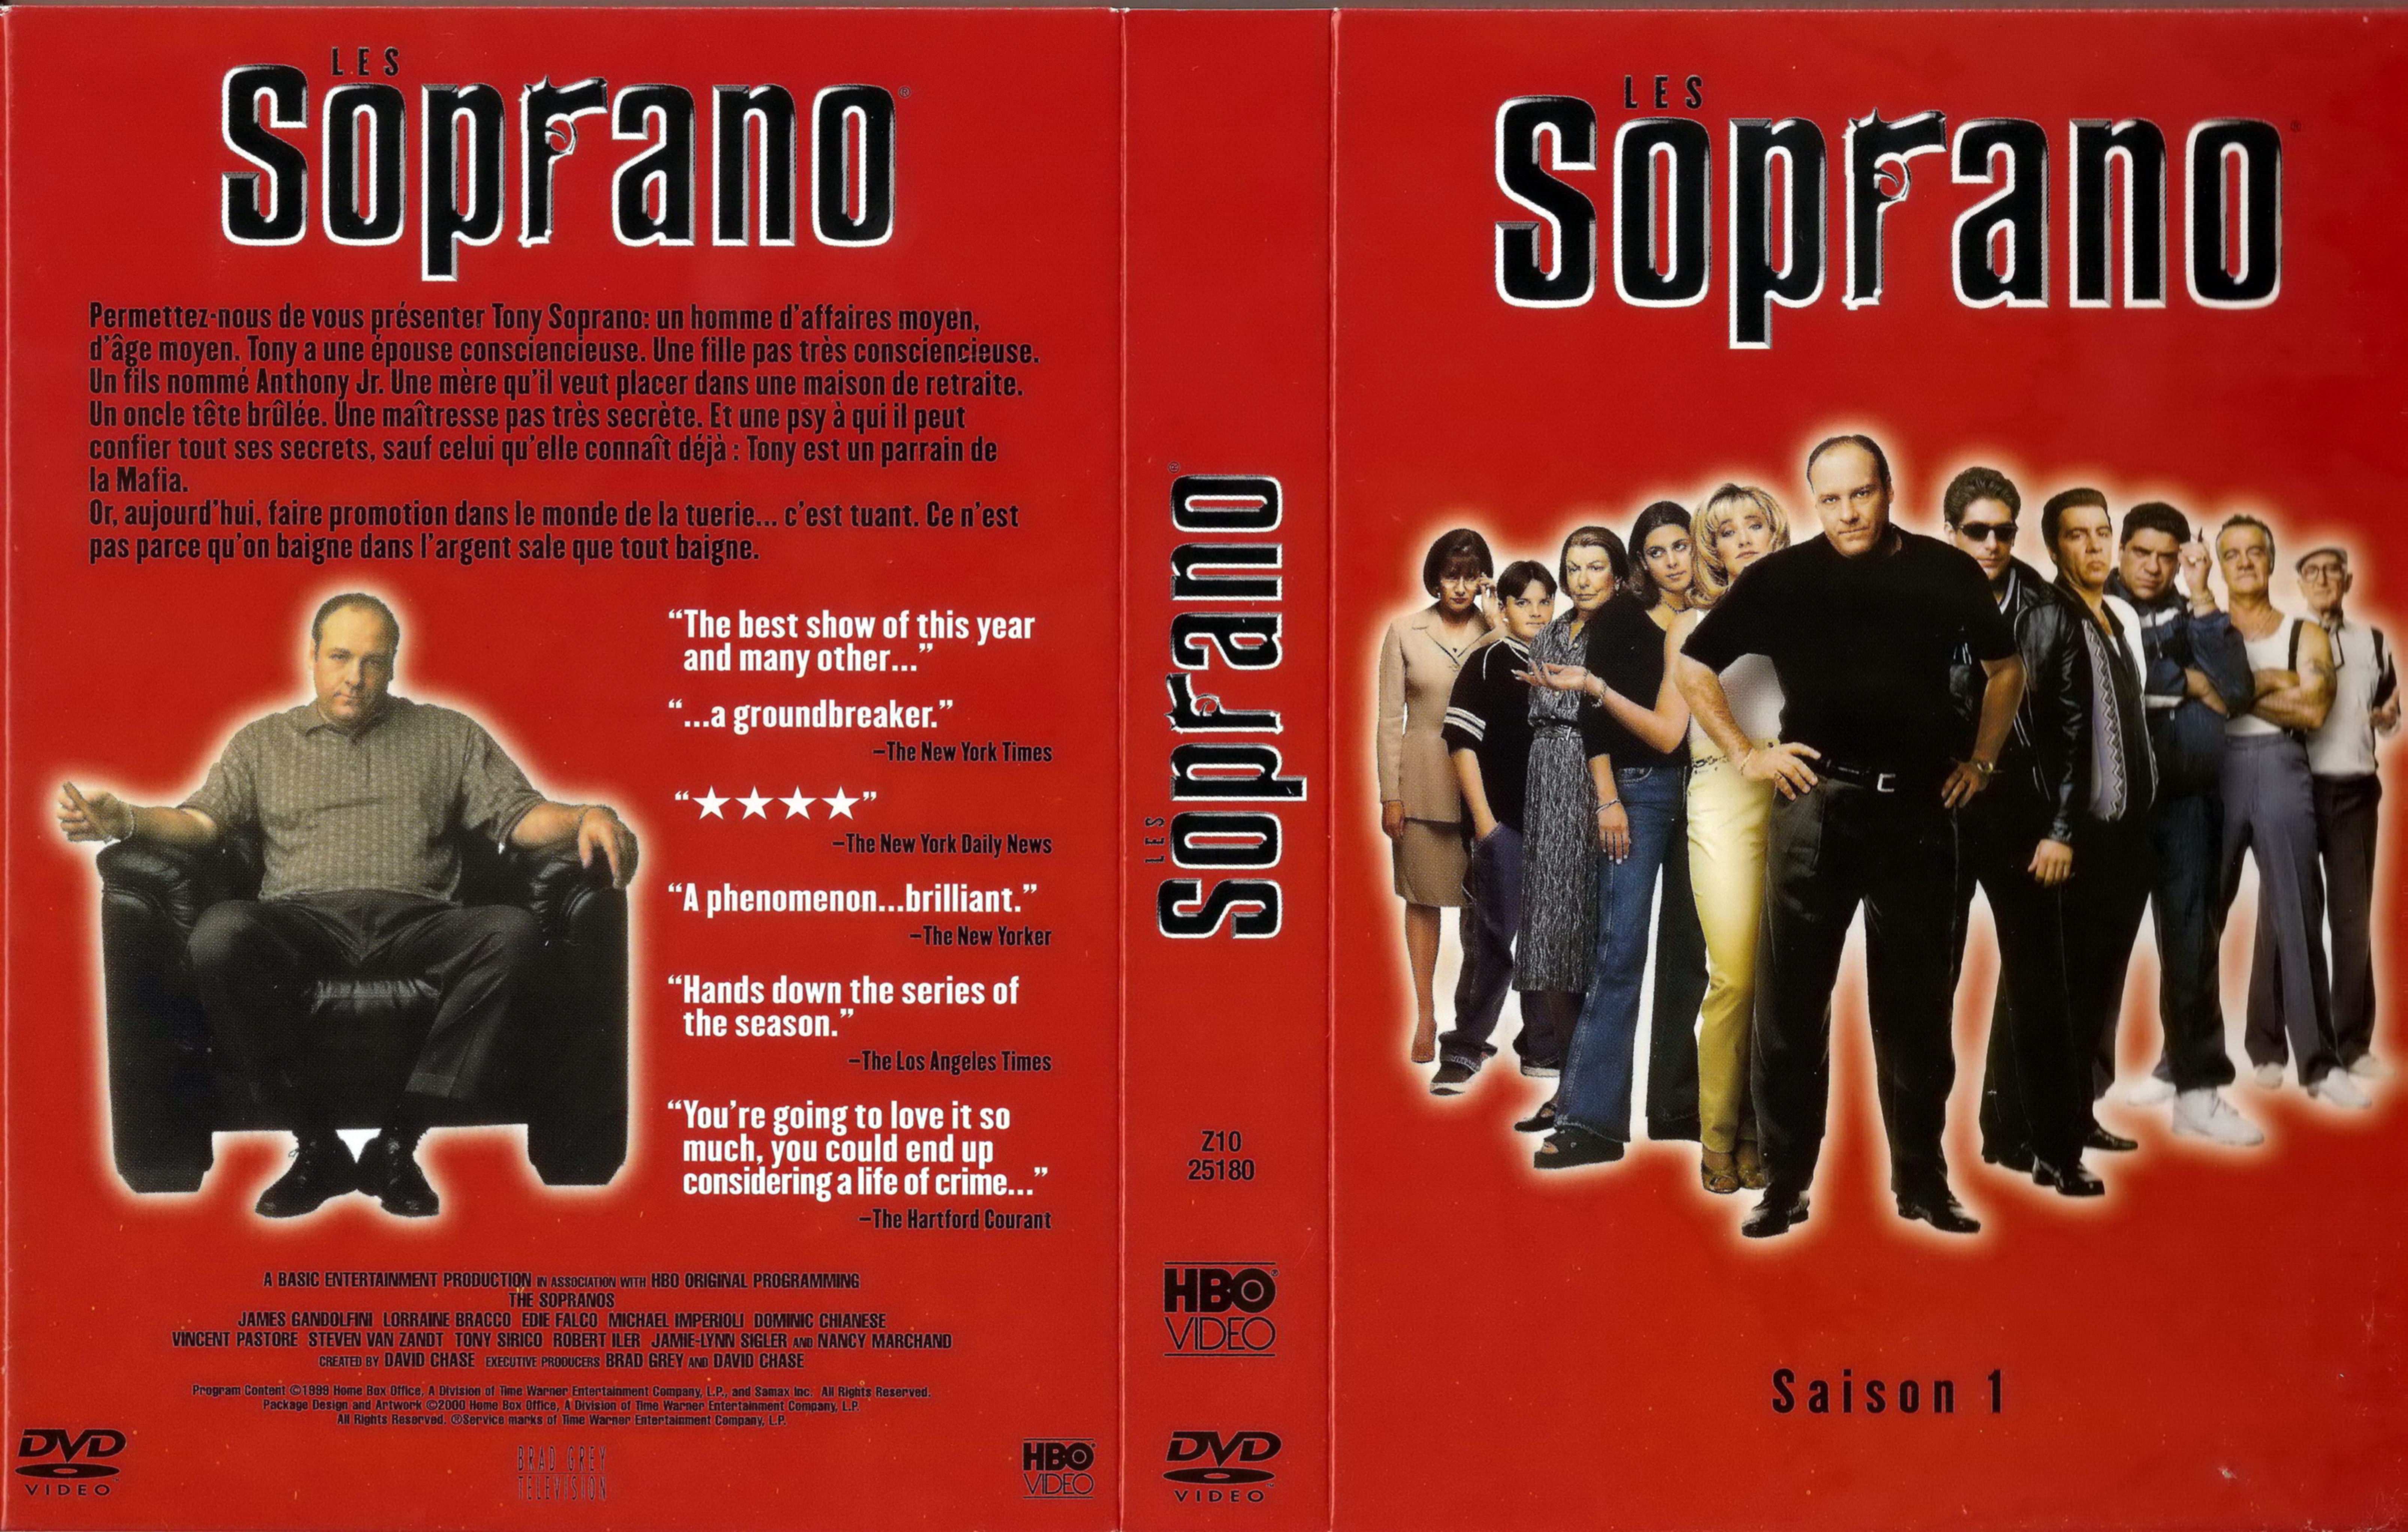 Jaquette DVD Les Soprano Saison 1 COFFRET v2